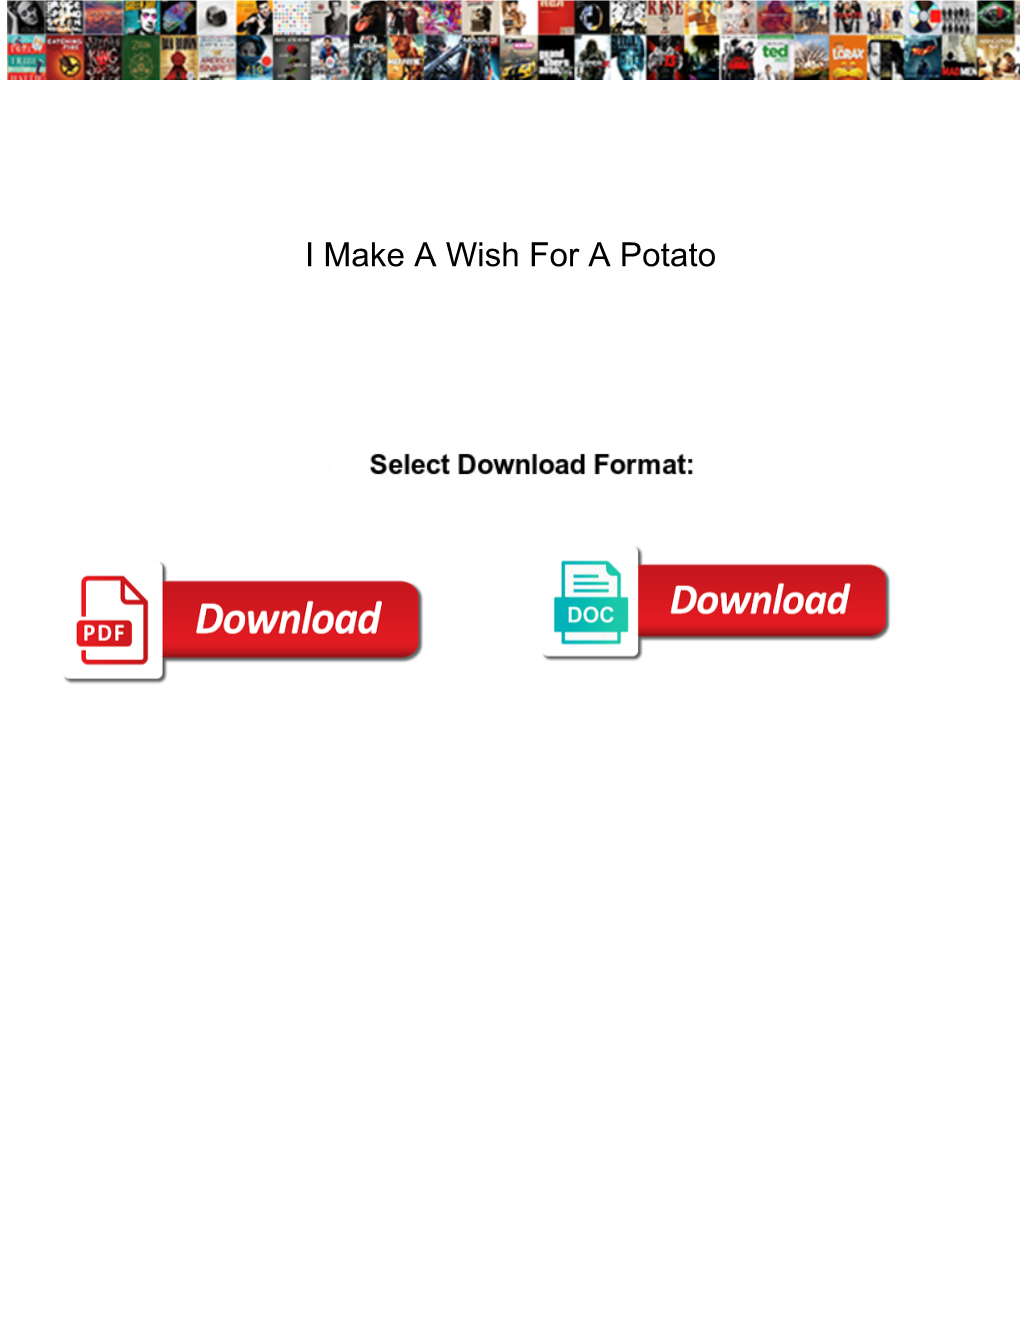 I Make a Wish for a Potato